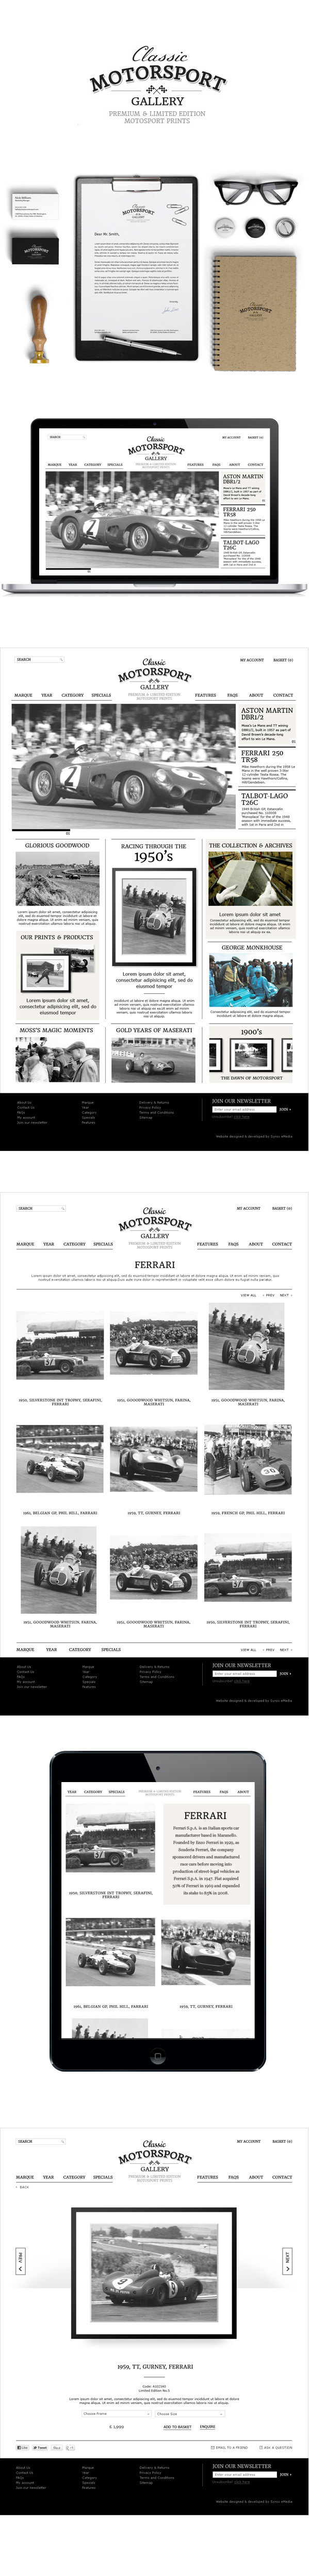 Classic Motor sport car car austin martin farrari luxury black and white Website Interface gallery print photo